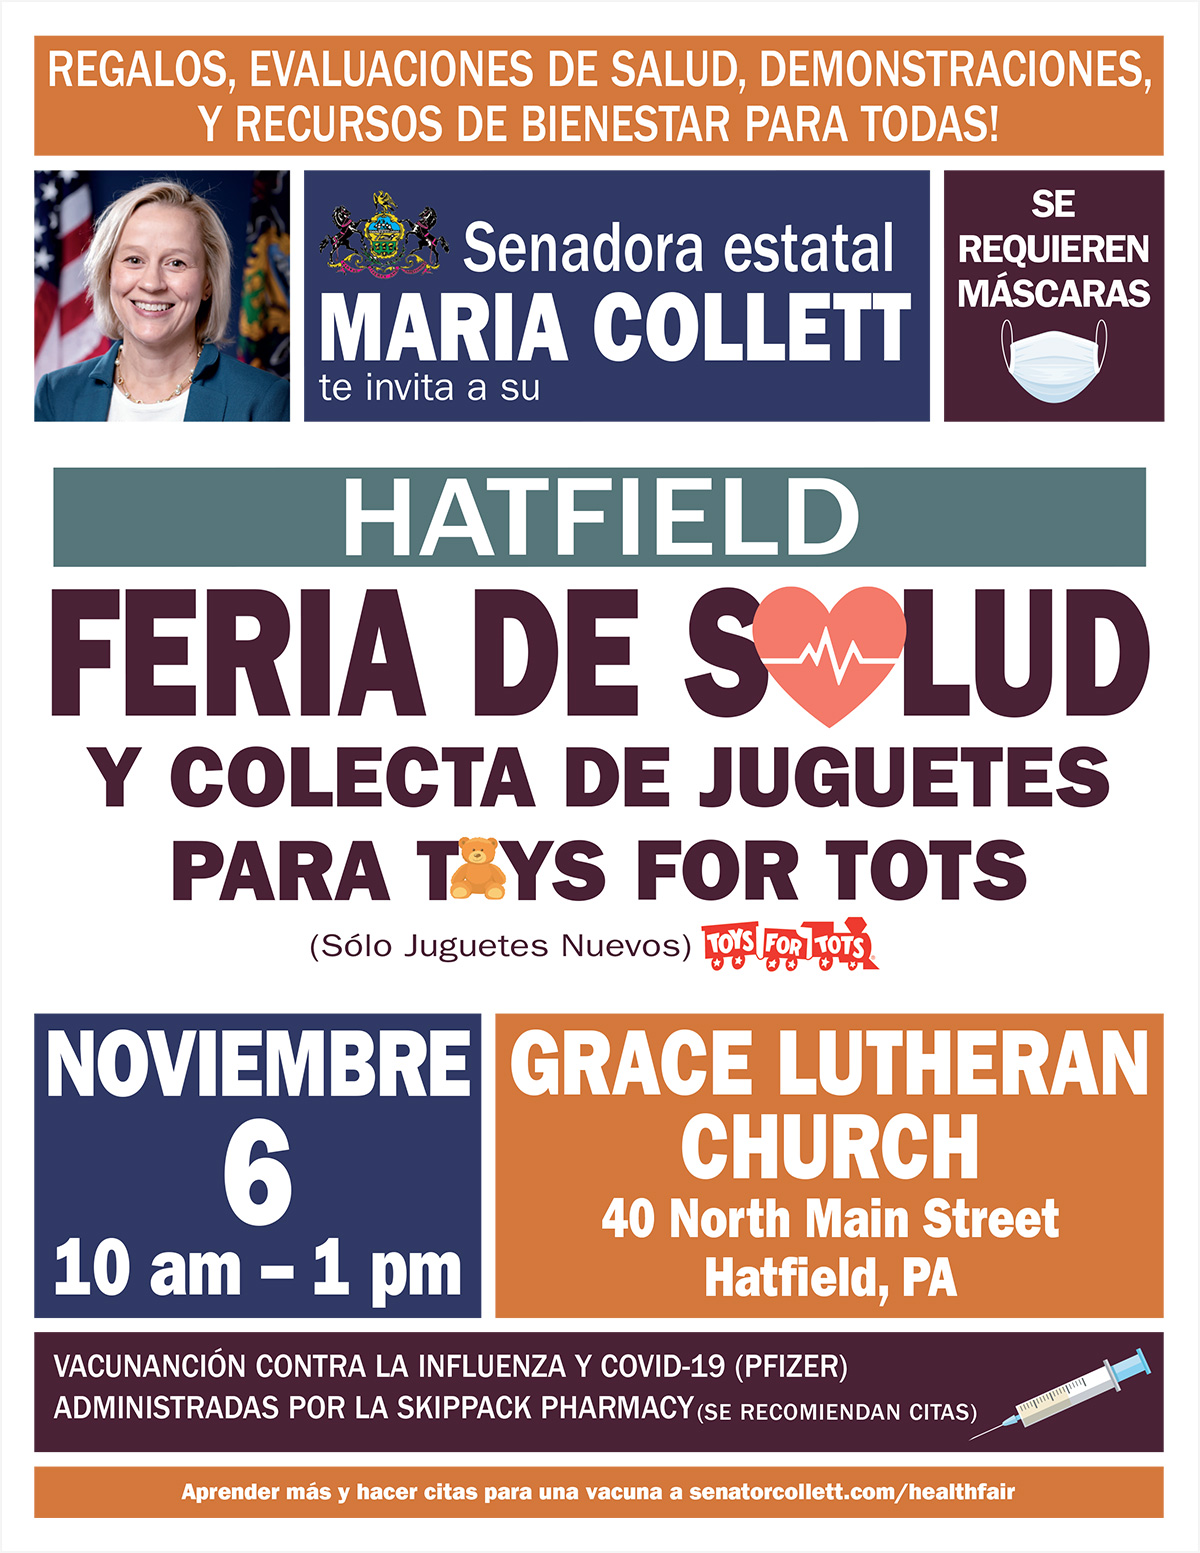 2021 Hatfield Health Fair & Toys for Tots Donation Drive